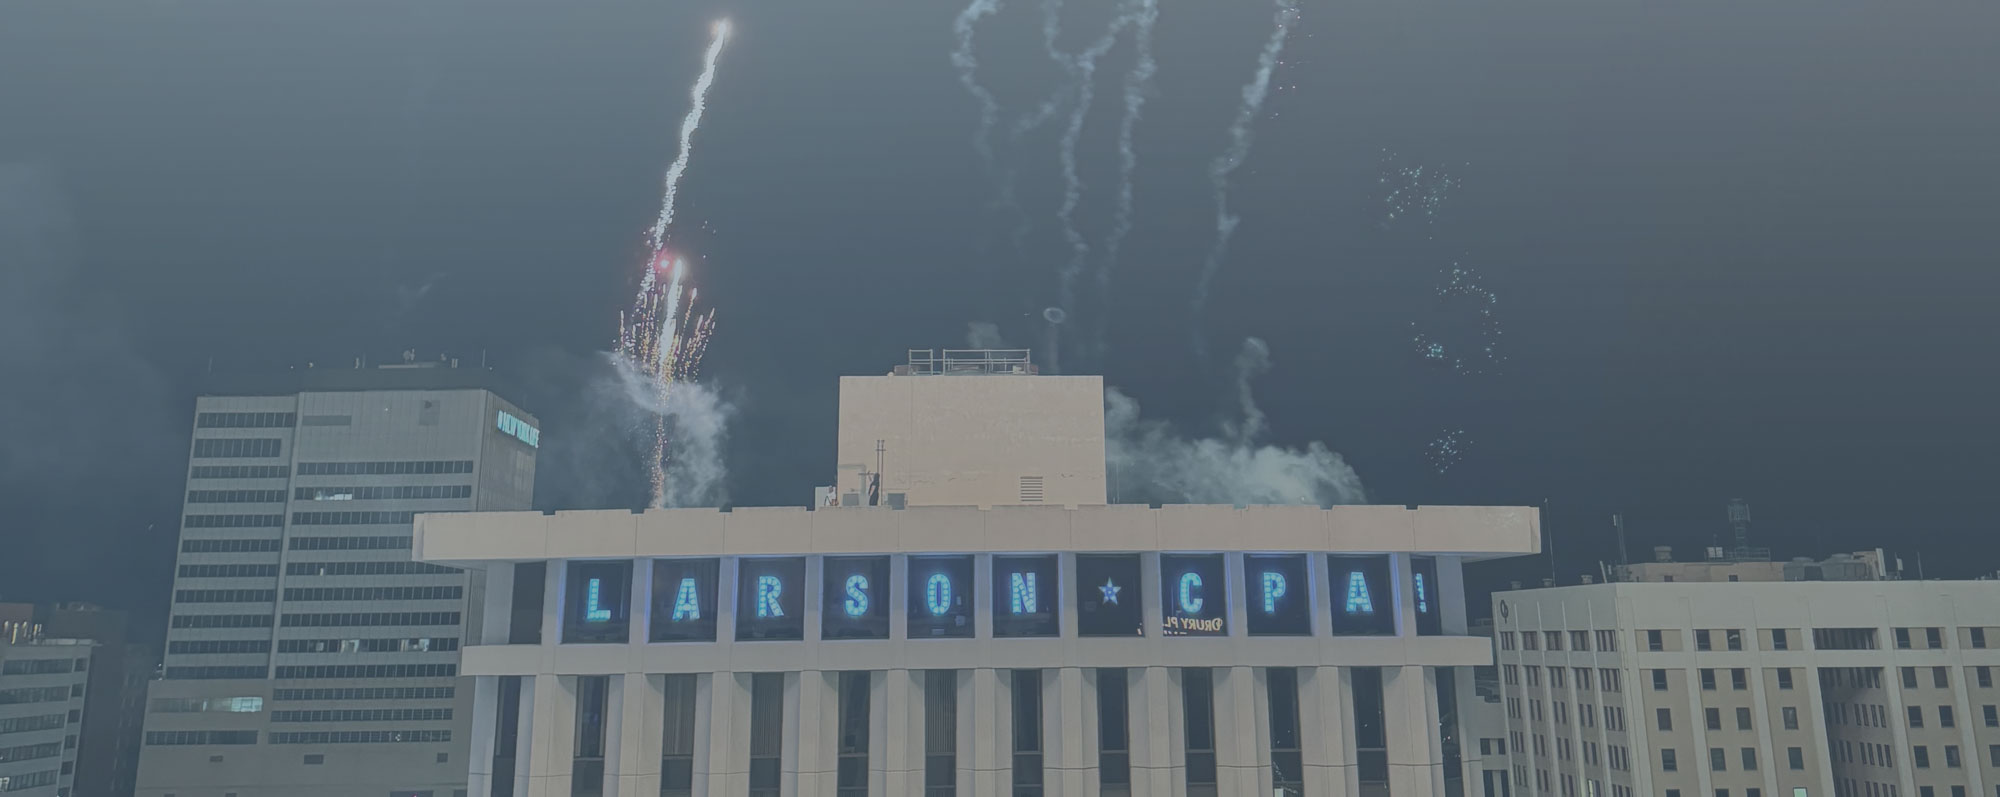 riverfest fireworks over larson offices